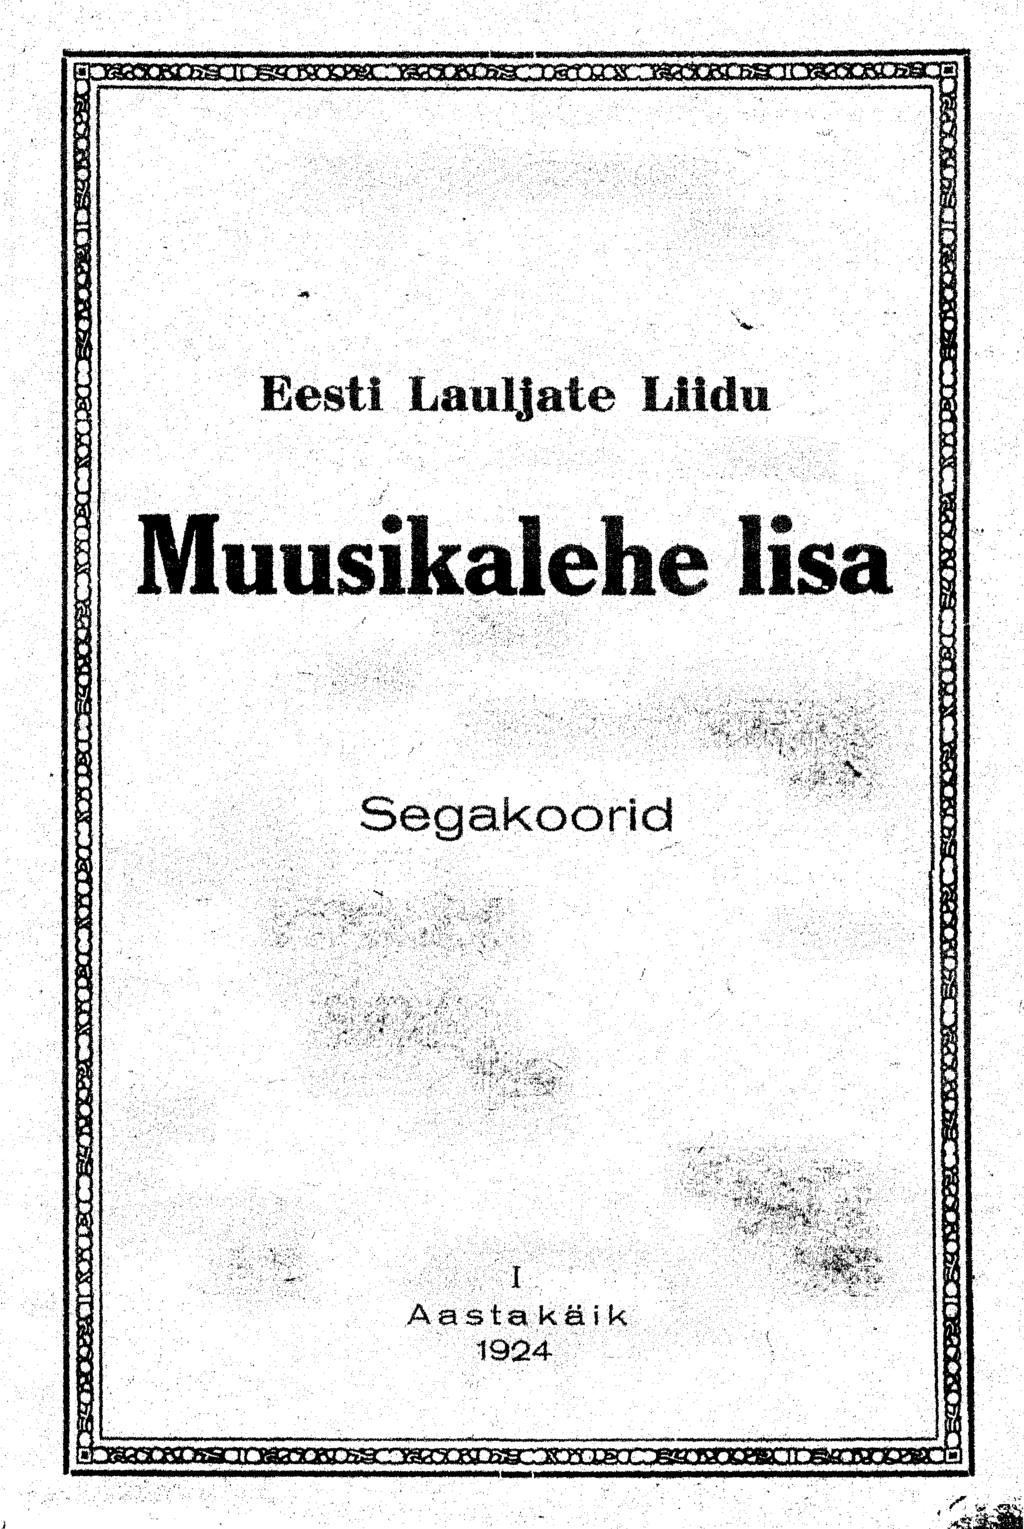 * Eesti Lauljate Liidu s UlislKdldlC Ilsel 5 ^.